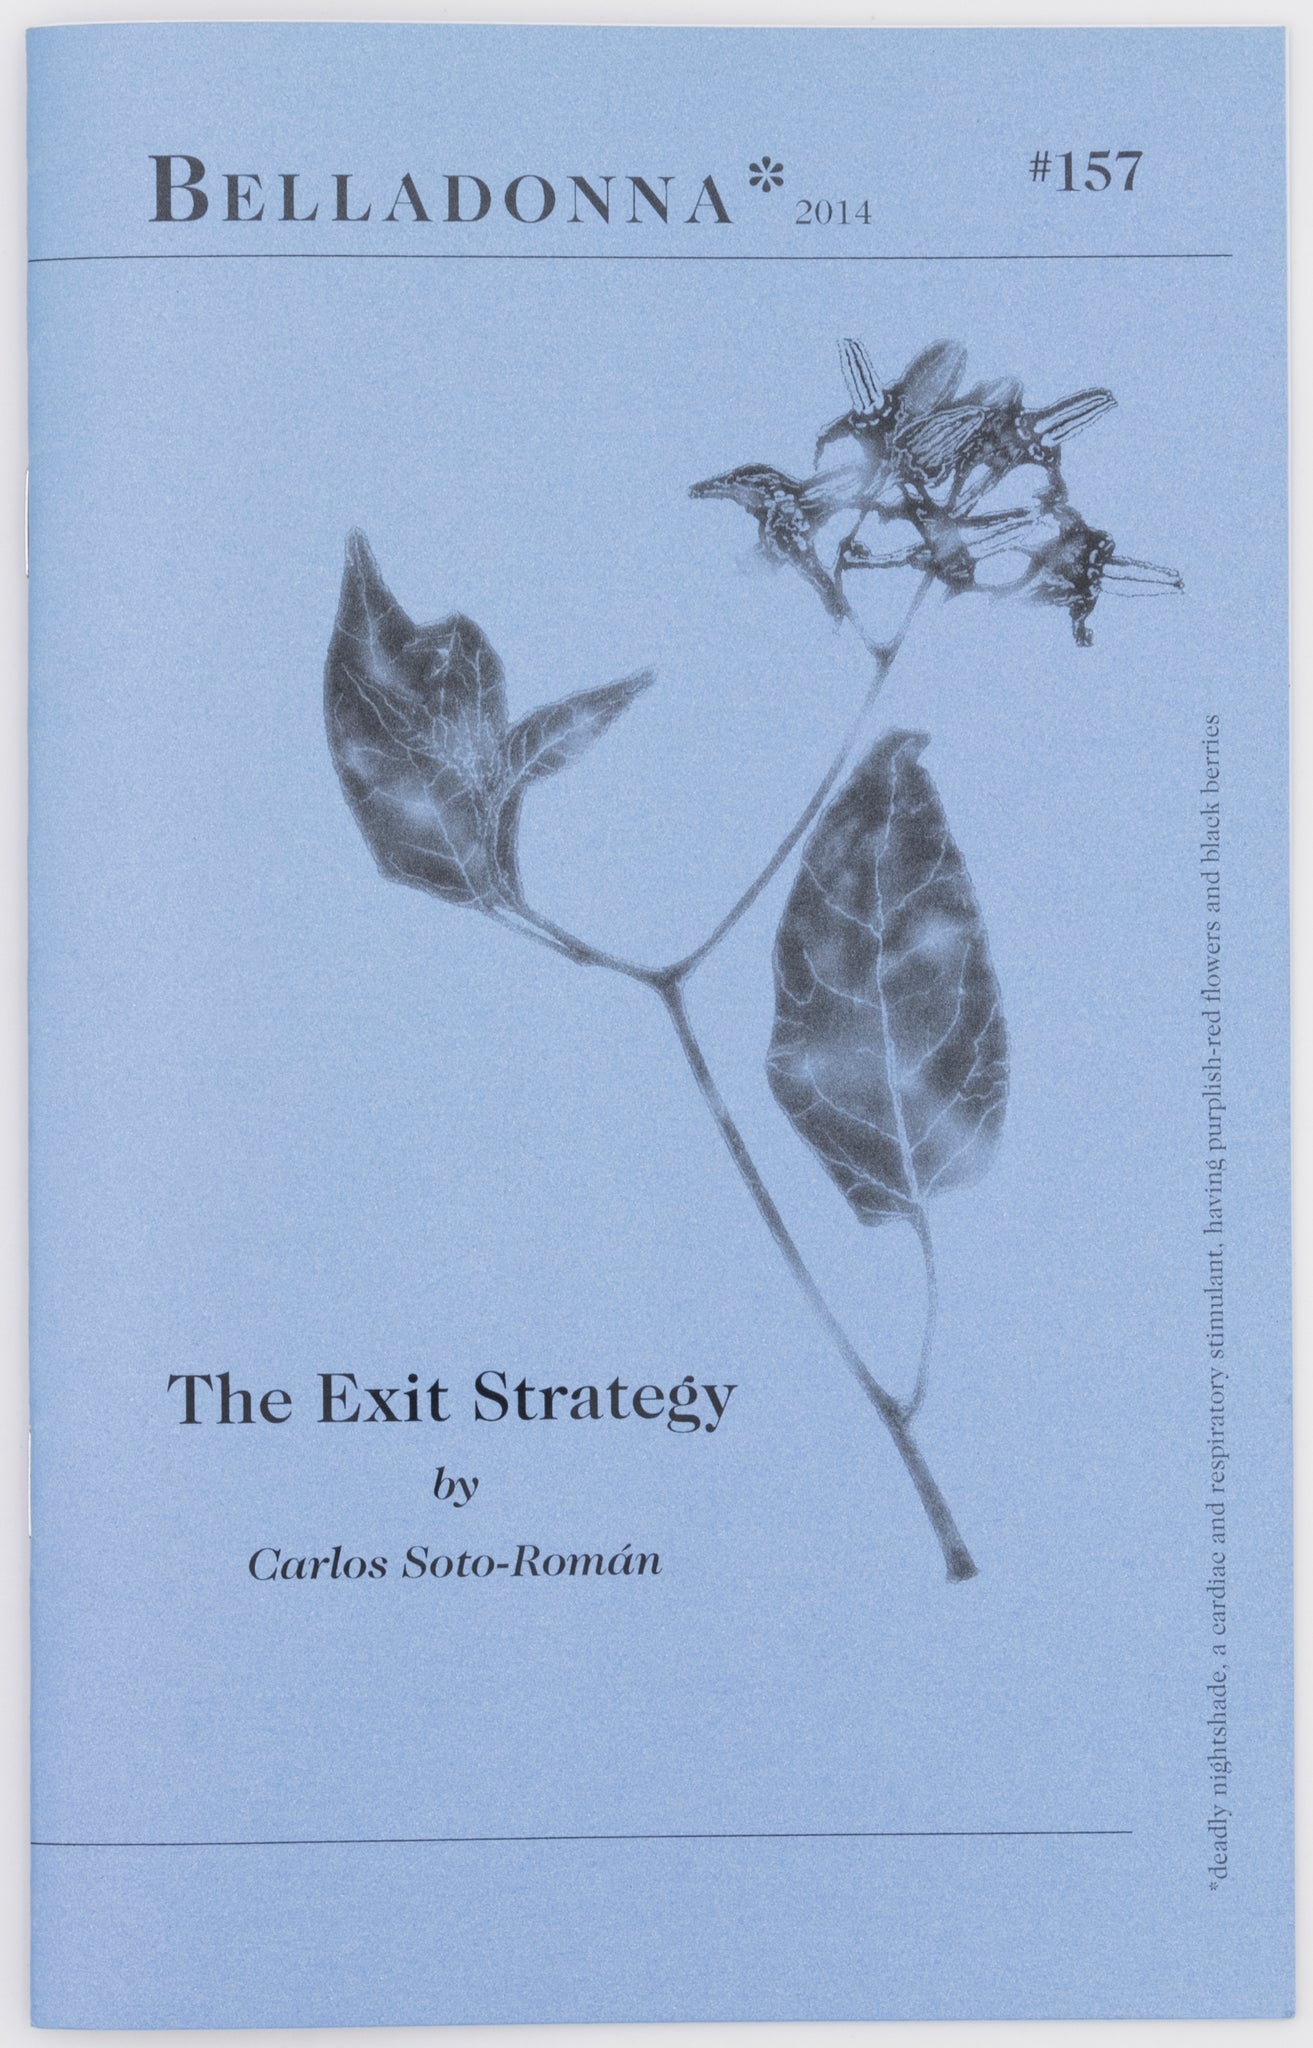 The Exit Strategy (Belladonna* #157)